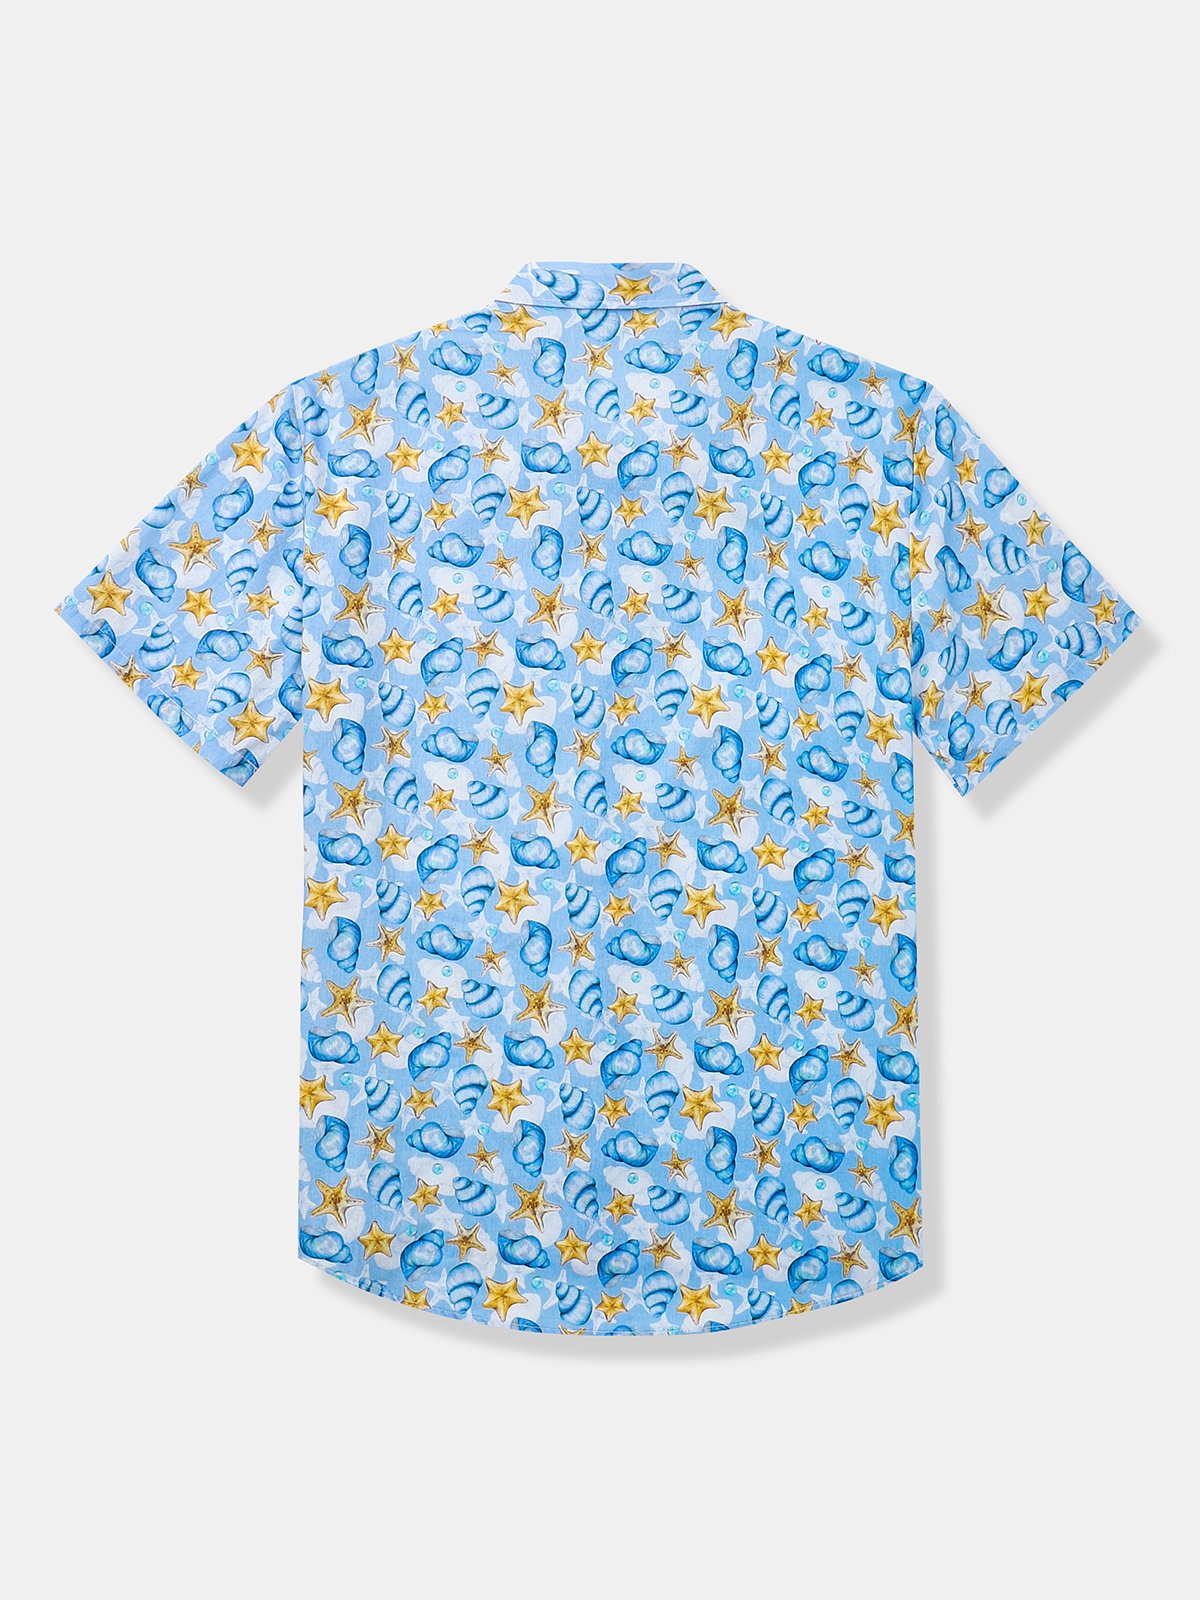 Hardaddy Sea Animal Conch Chest Pocket Short Sleeve Casual Shirt